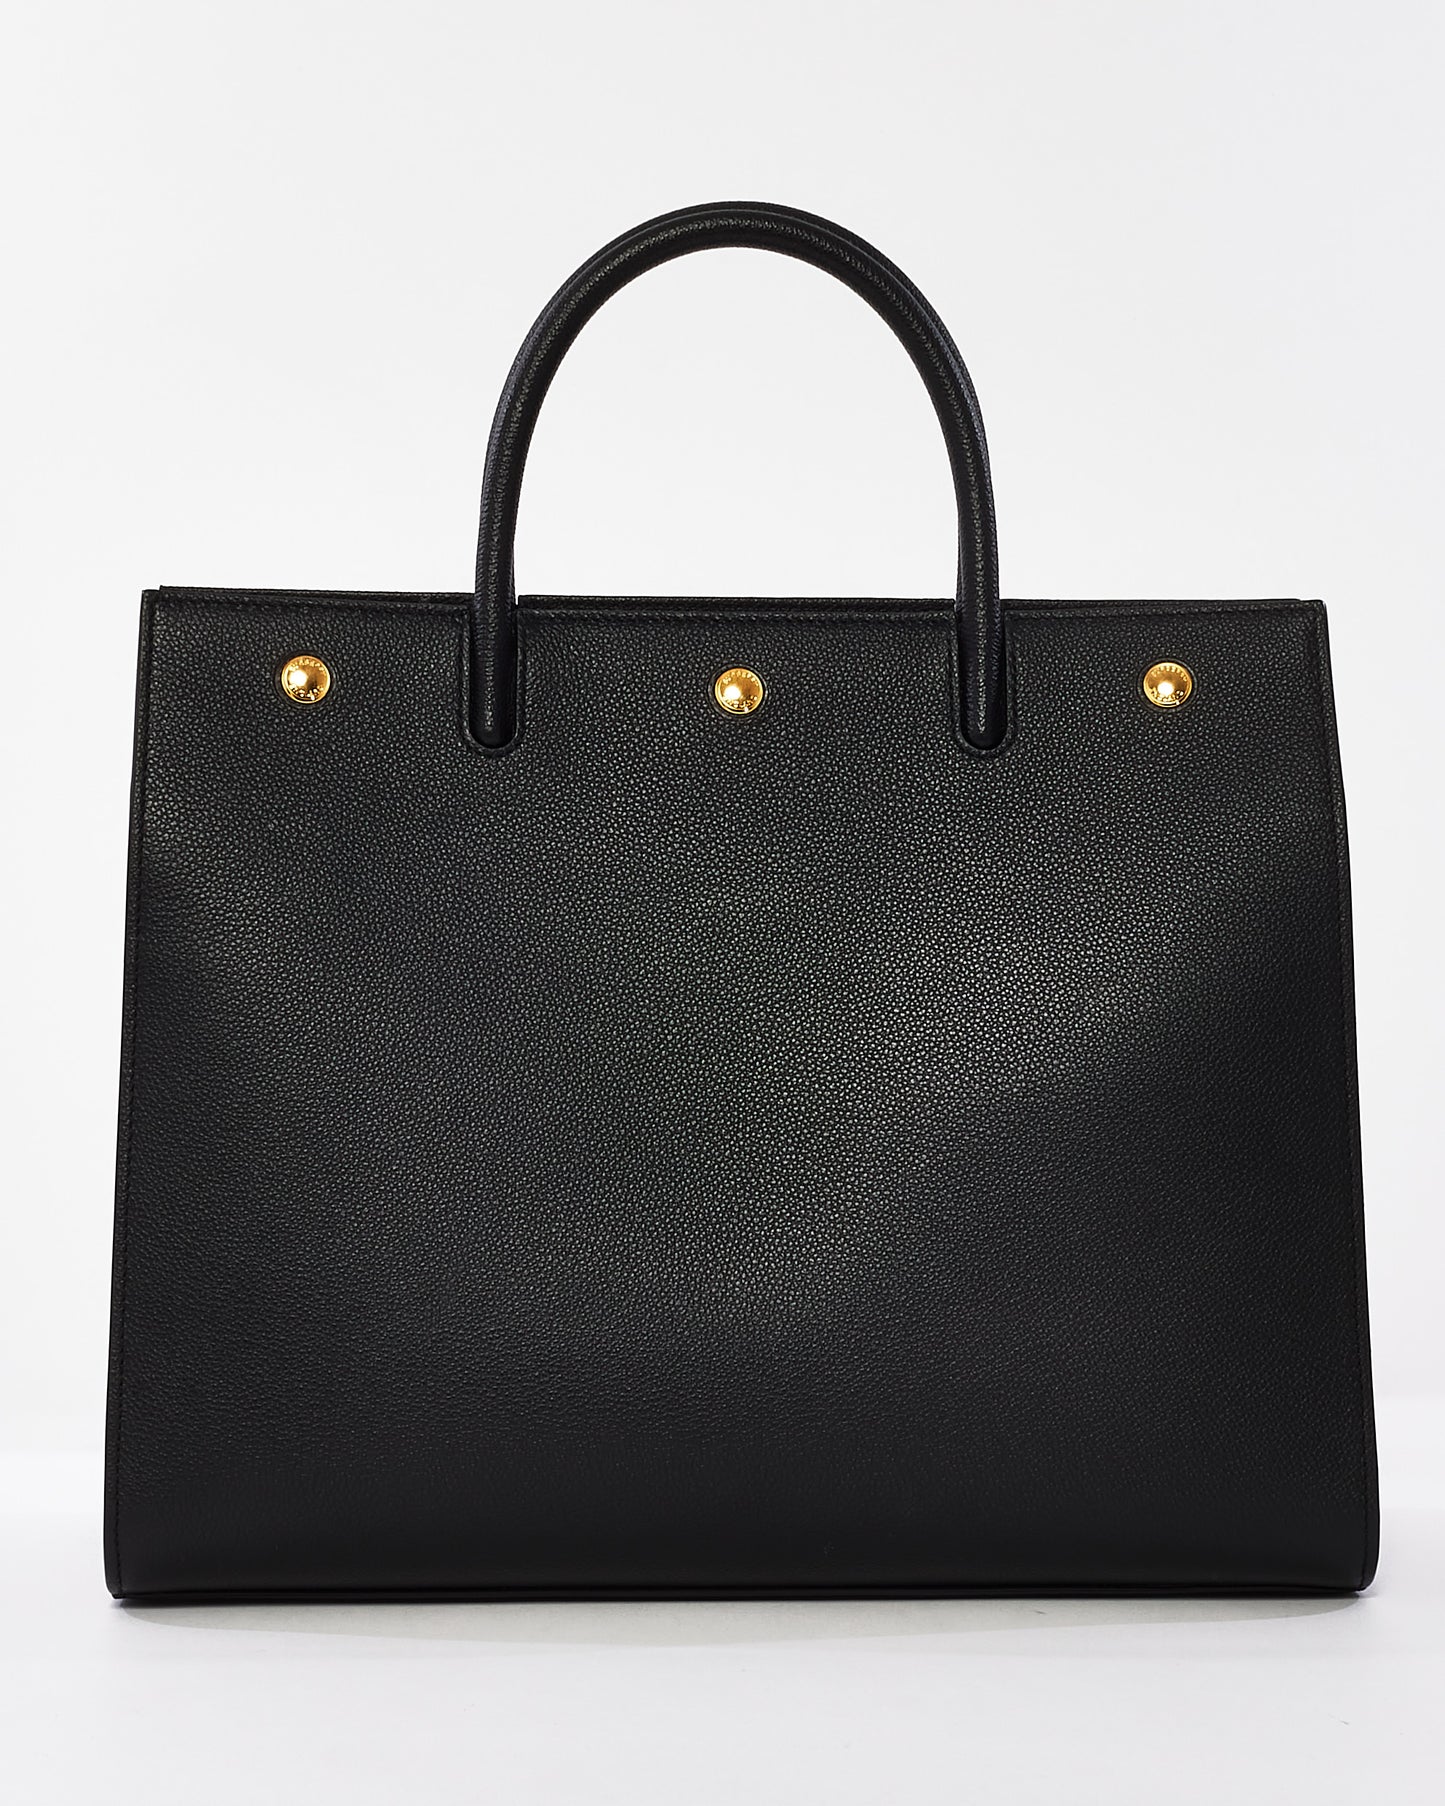 Burberry Black Leather Medium Title Tote Bag